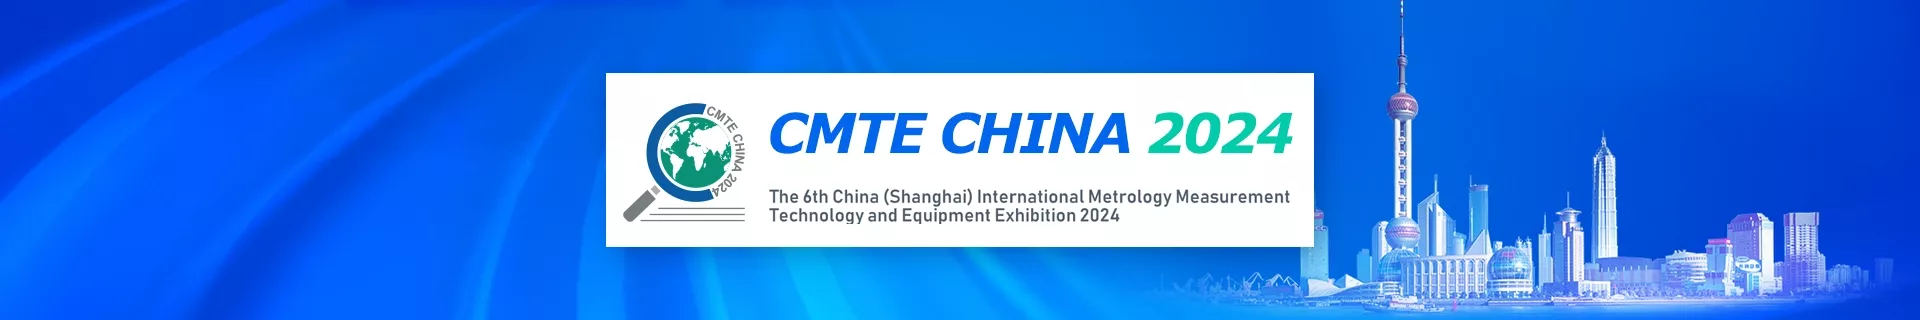 Headerbild CMTE 2024 6th China Shanghai International Metrology Exhibition